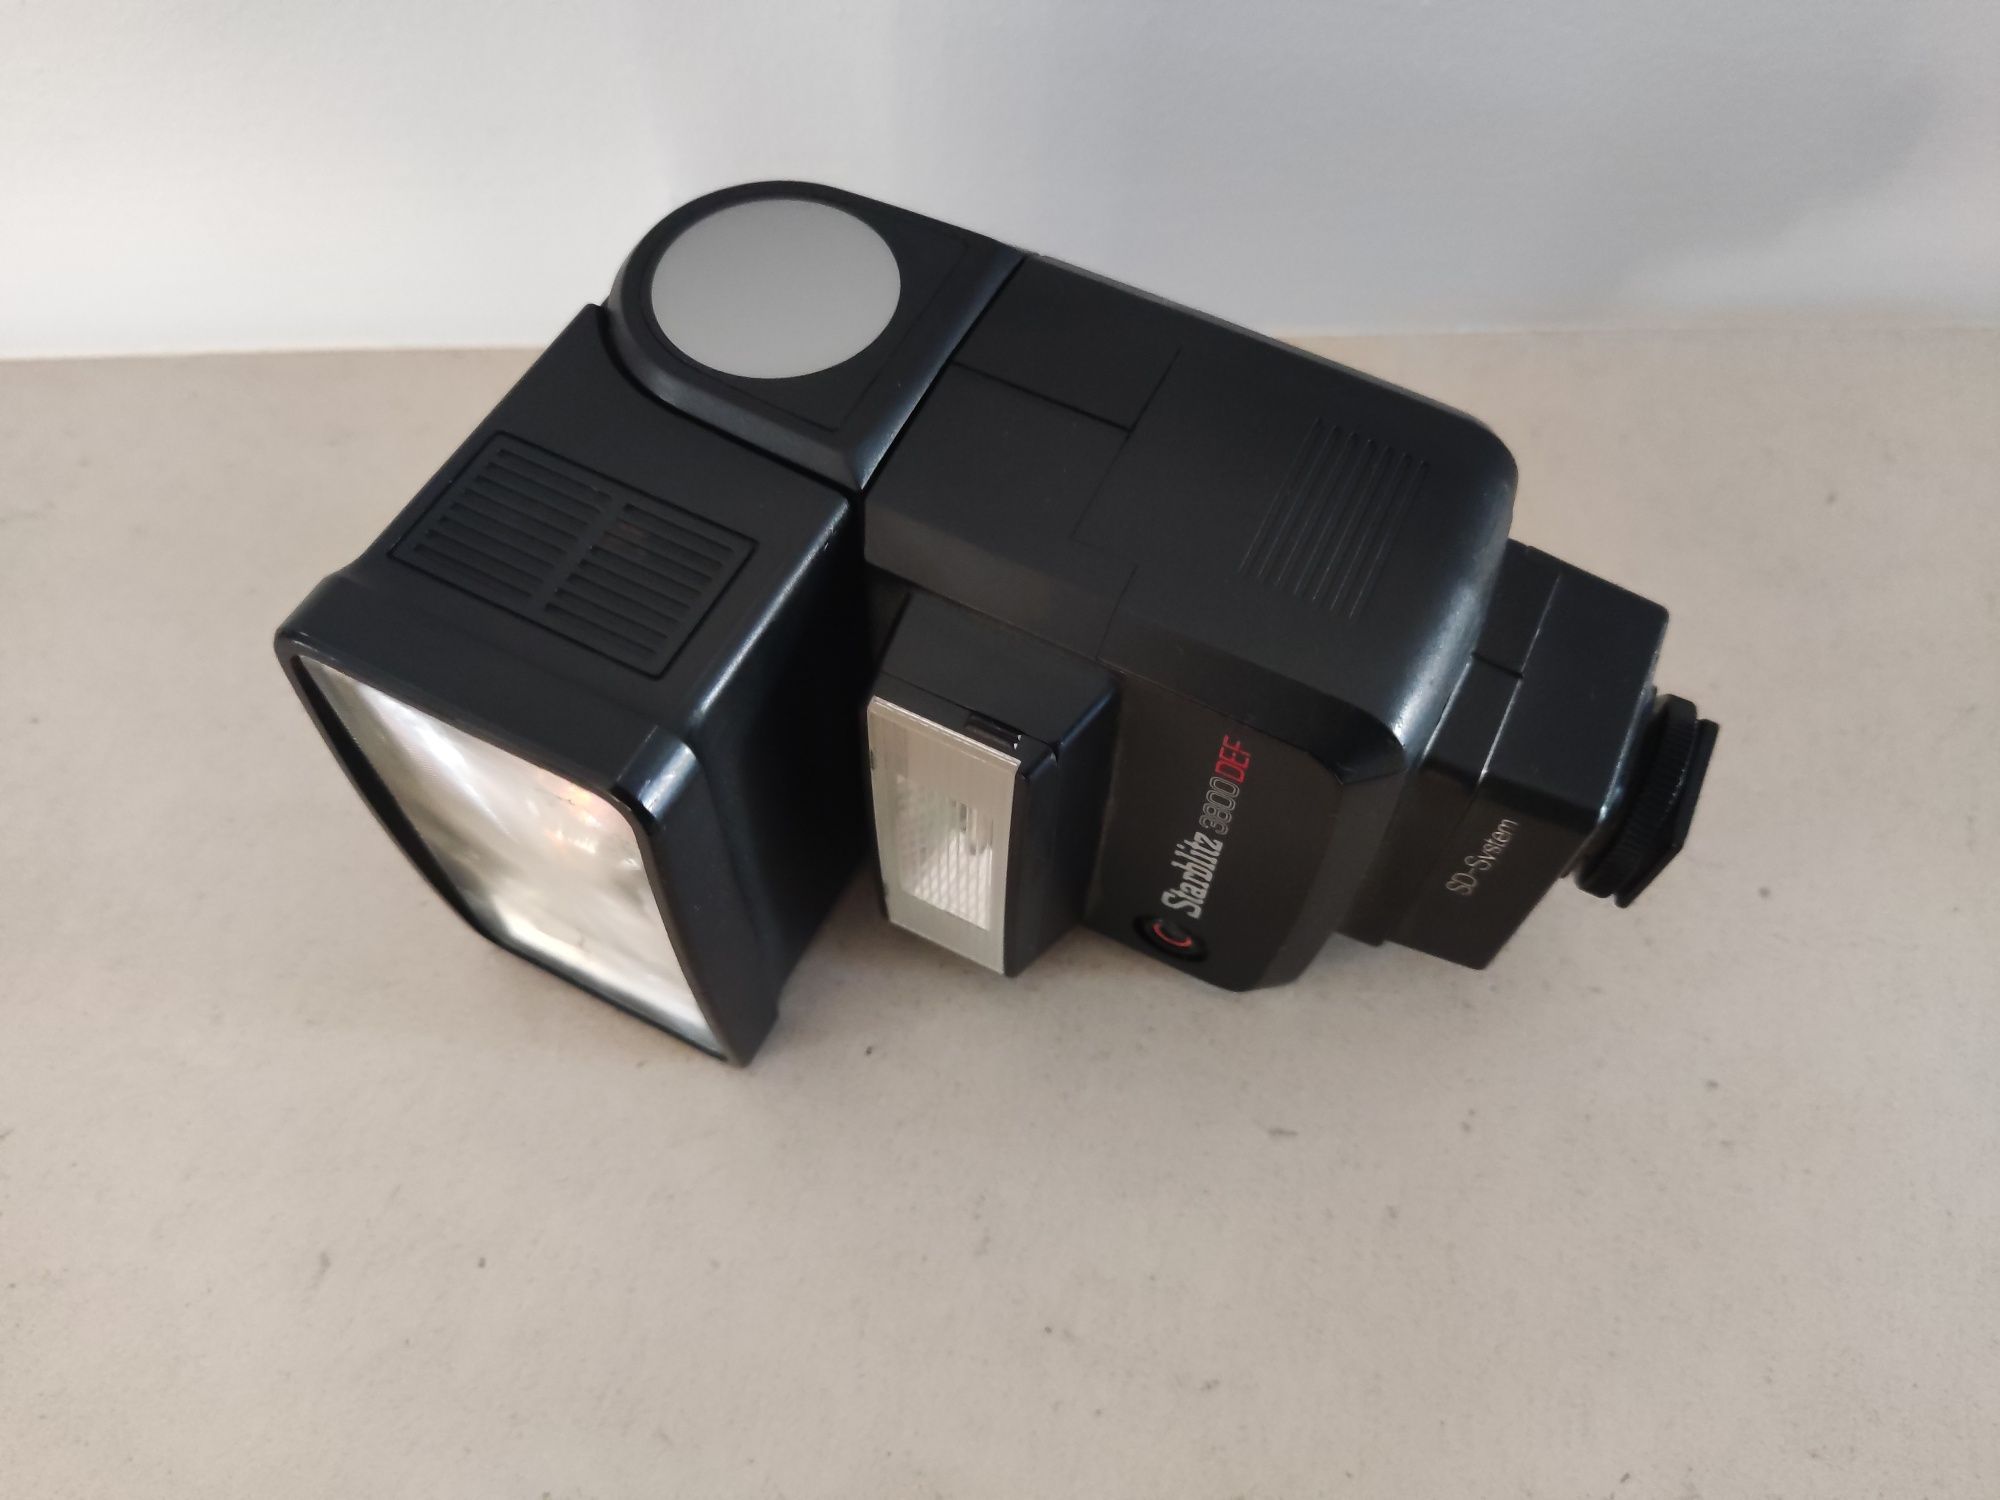 Flash Starblitz 3800 DEF SD-System DN-1 for Nikon